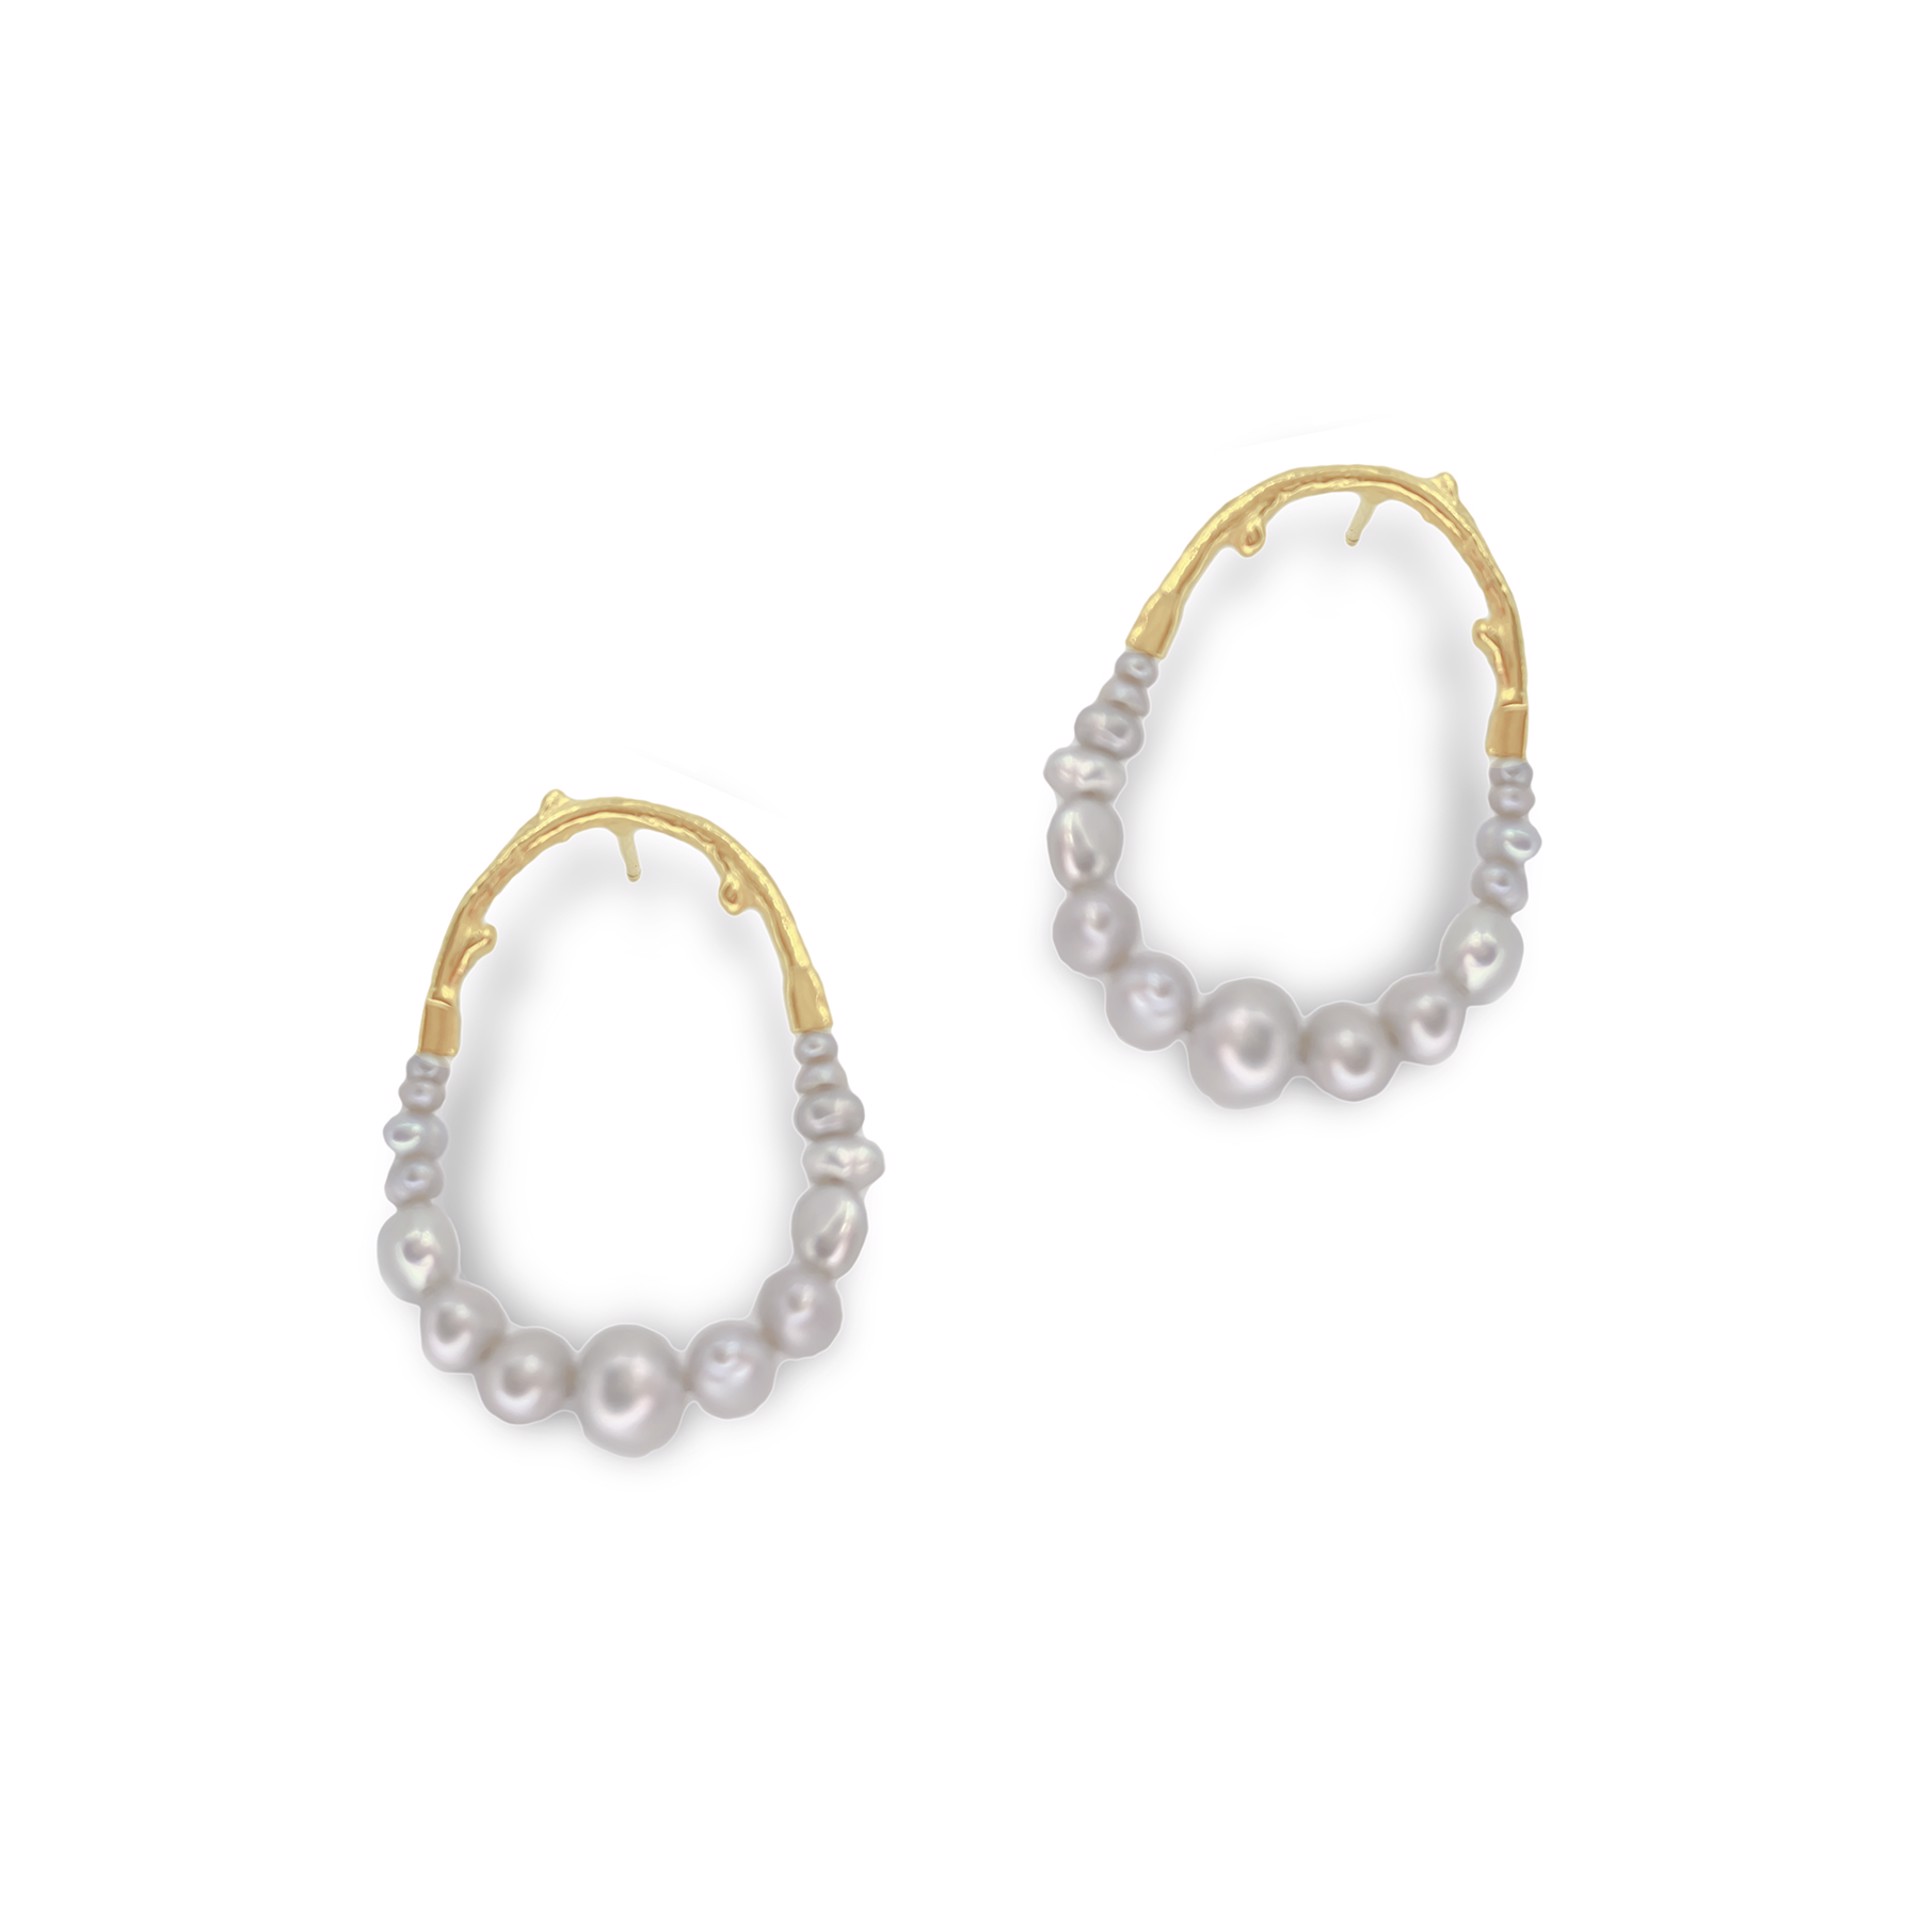 Small Gold/ Gray Maxima Earrings by Anna Johnson